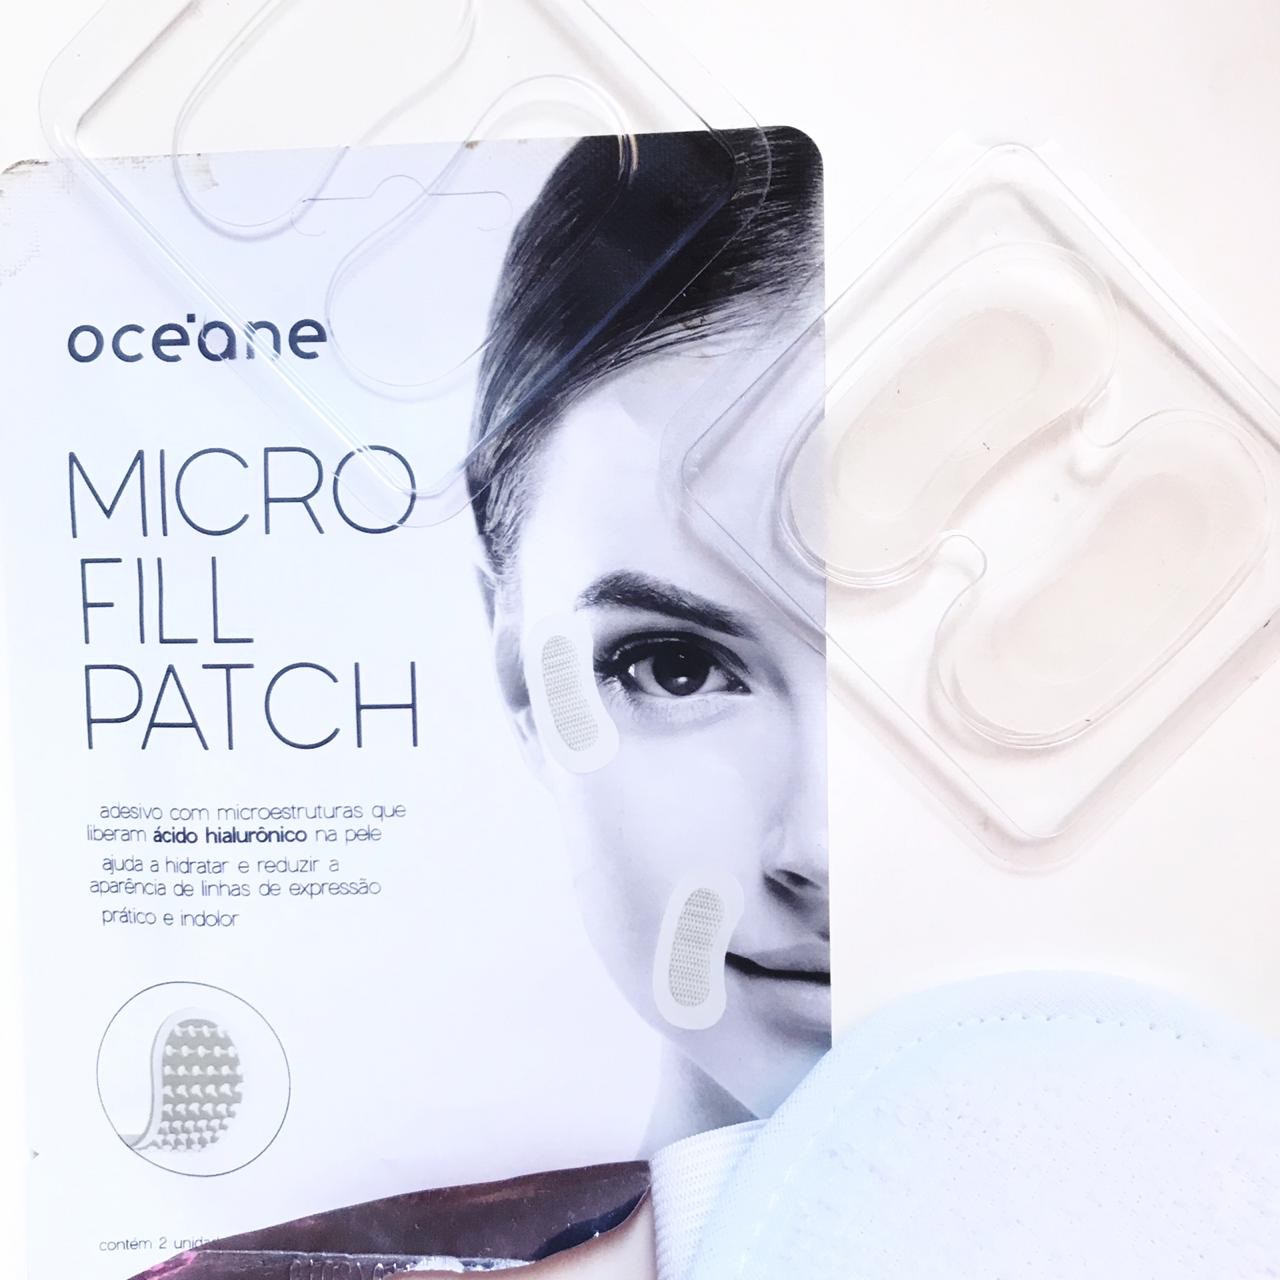 Micro Fill Patch, Océane  (Foto: Acervo Pessoal)